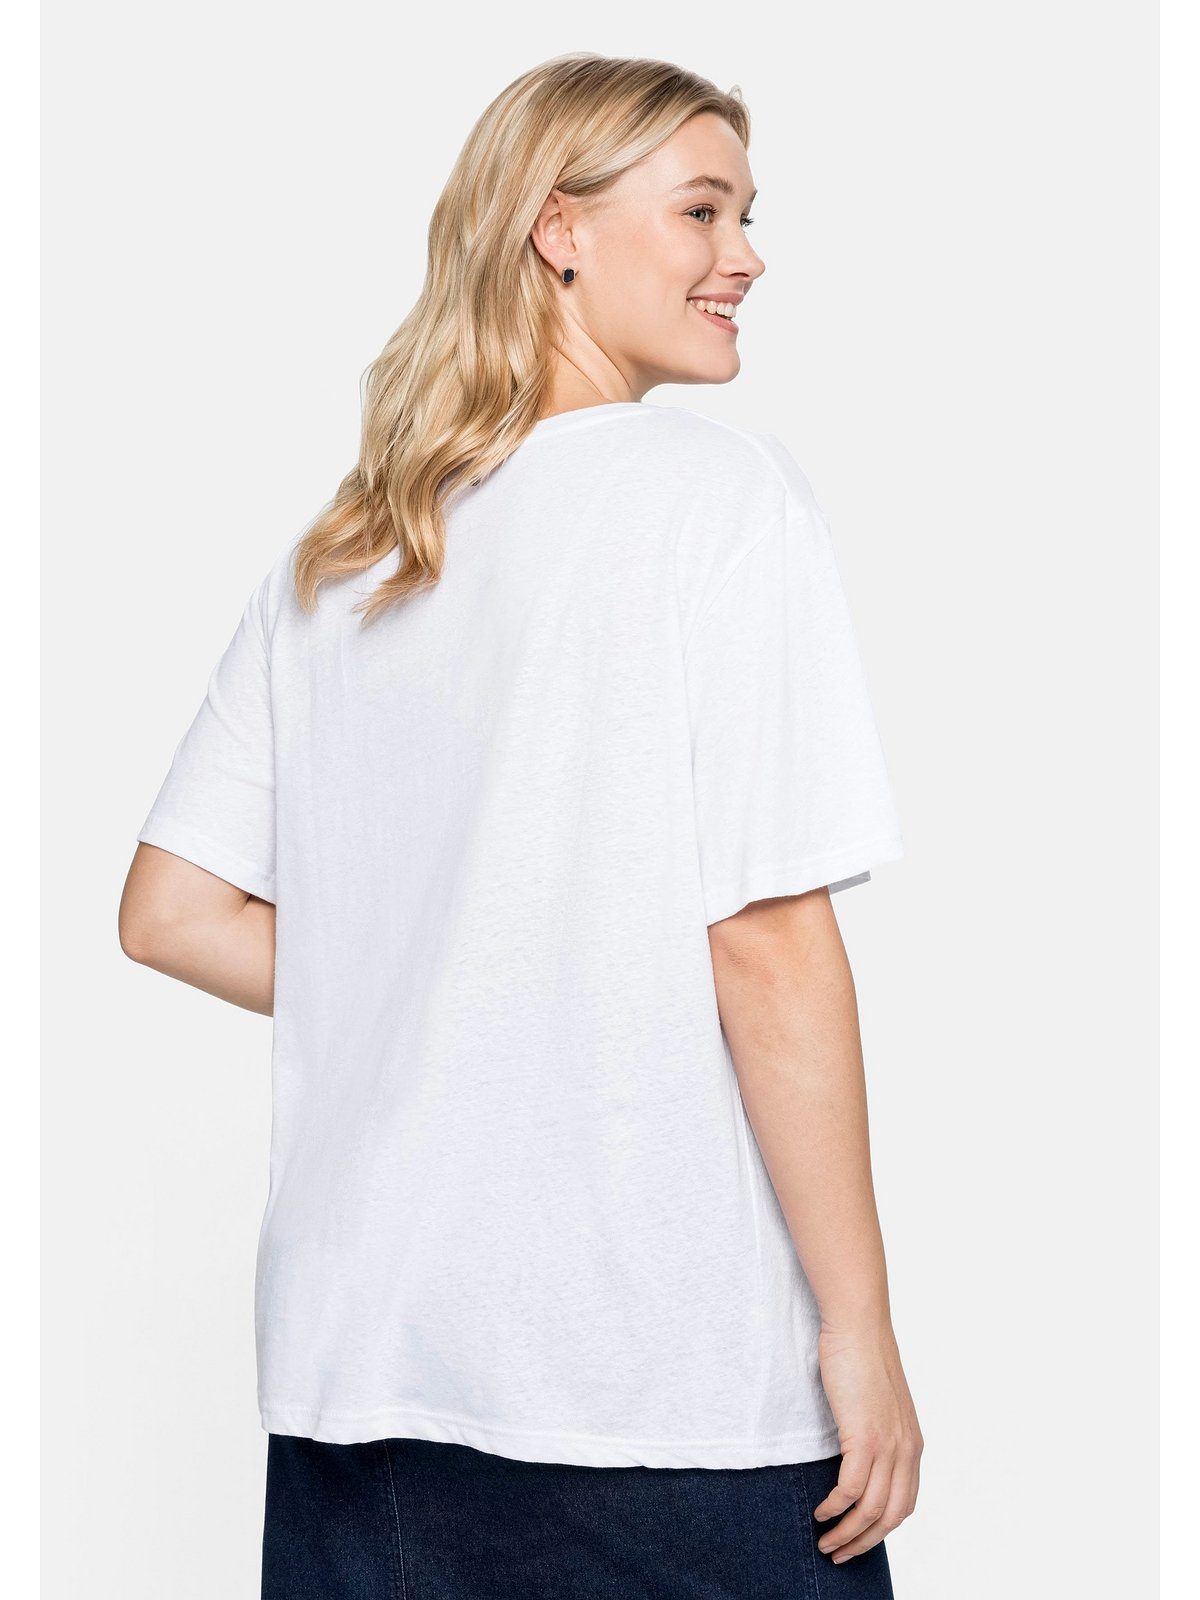 Sheego T-Shirt Große edlem Größen weiß aus Leinen-Viskose-Mix